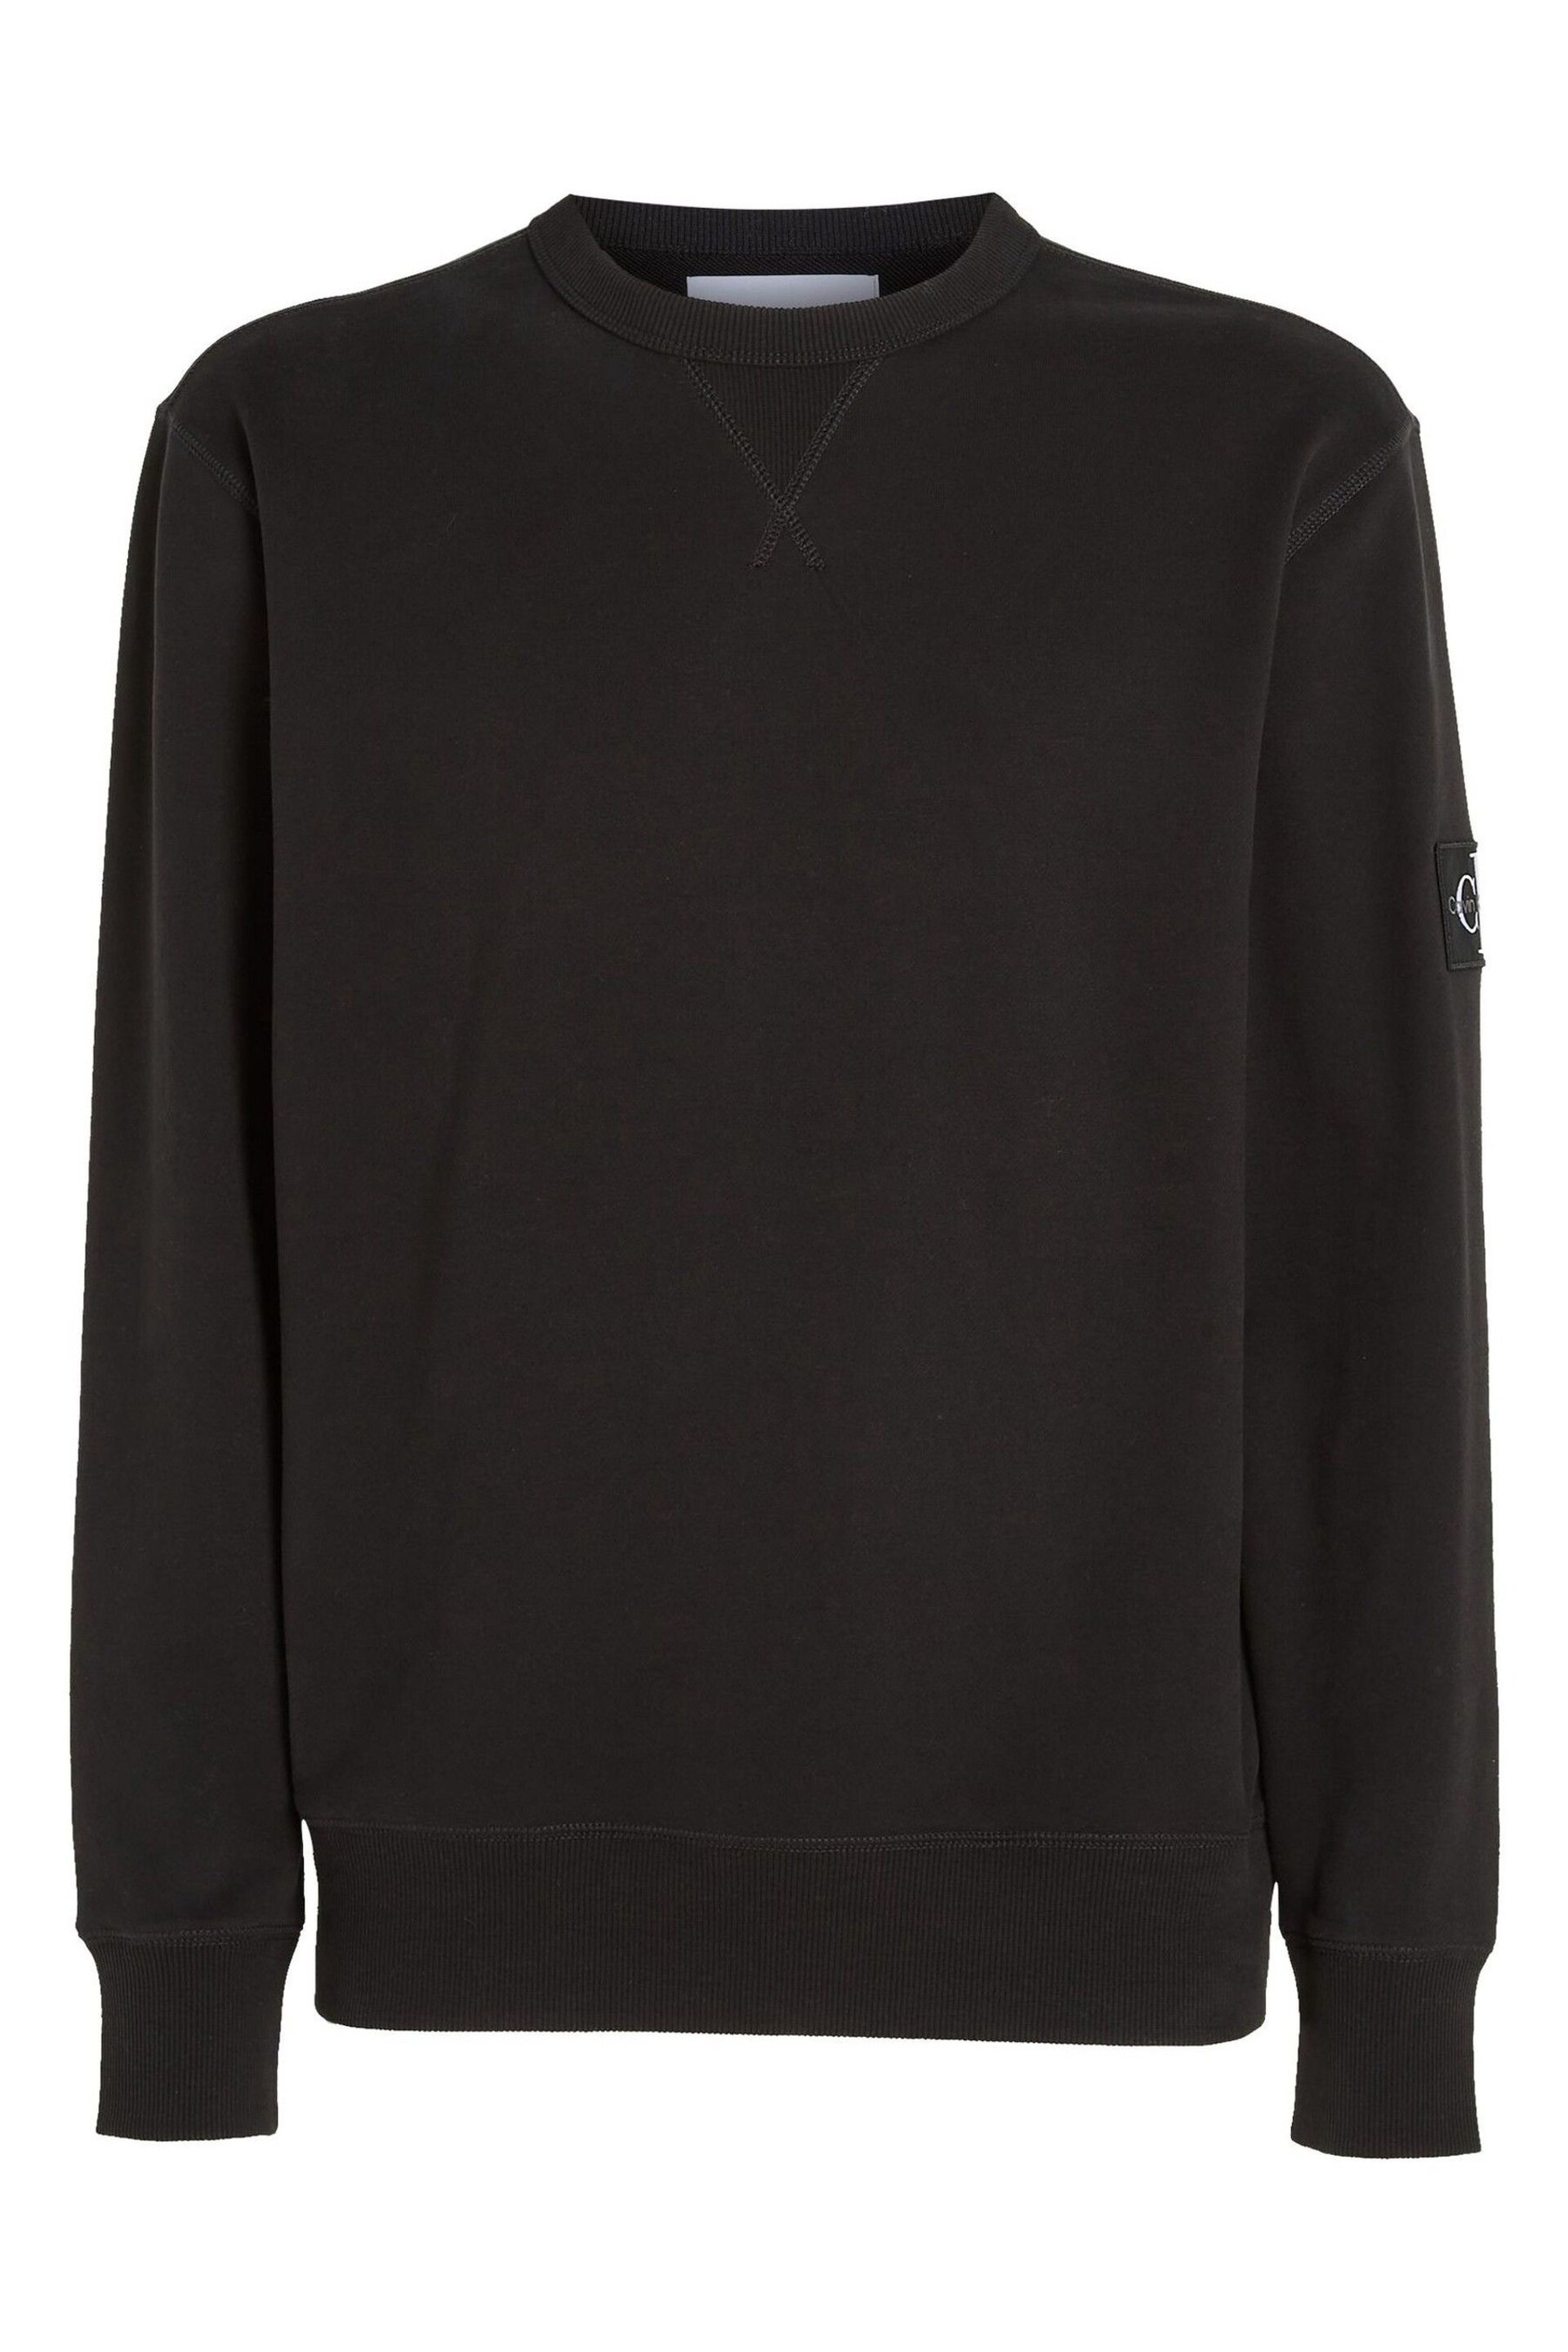 Calvin Klein Jeans Monogram Badge Logo Crew Neck Black Sweatshirt - Image 4 of 6